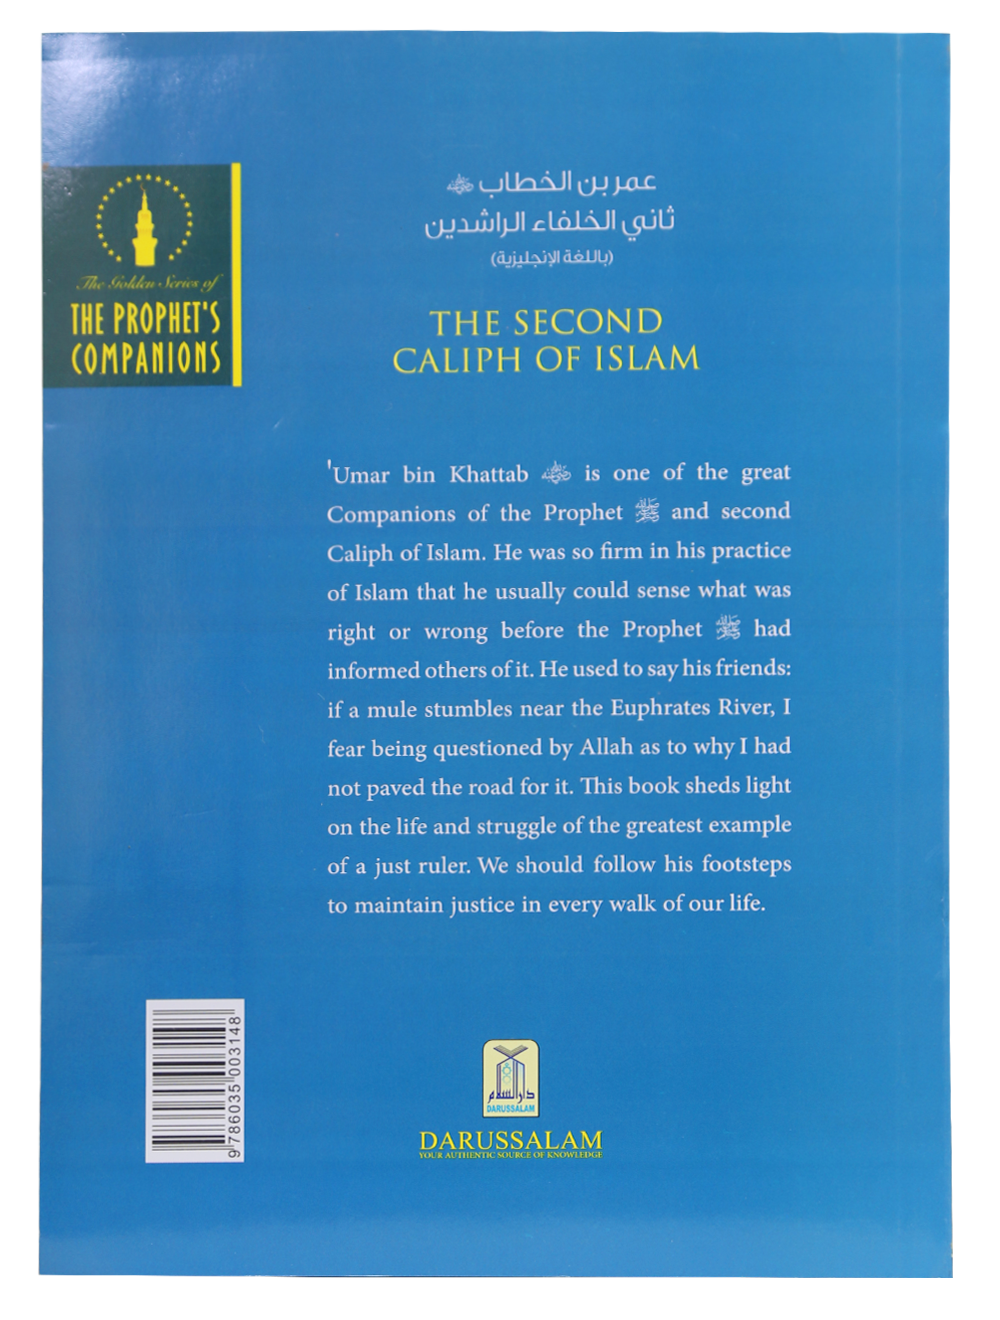 Umar bin Al Khattab (The Golden Series of The Prophet's Companions)